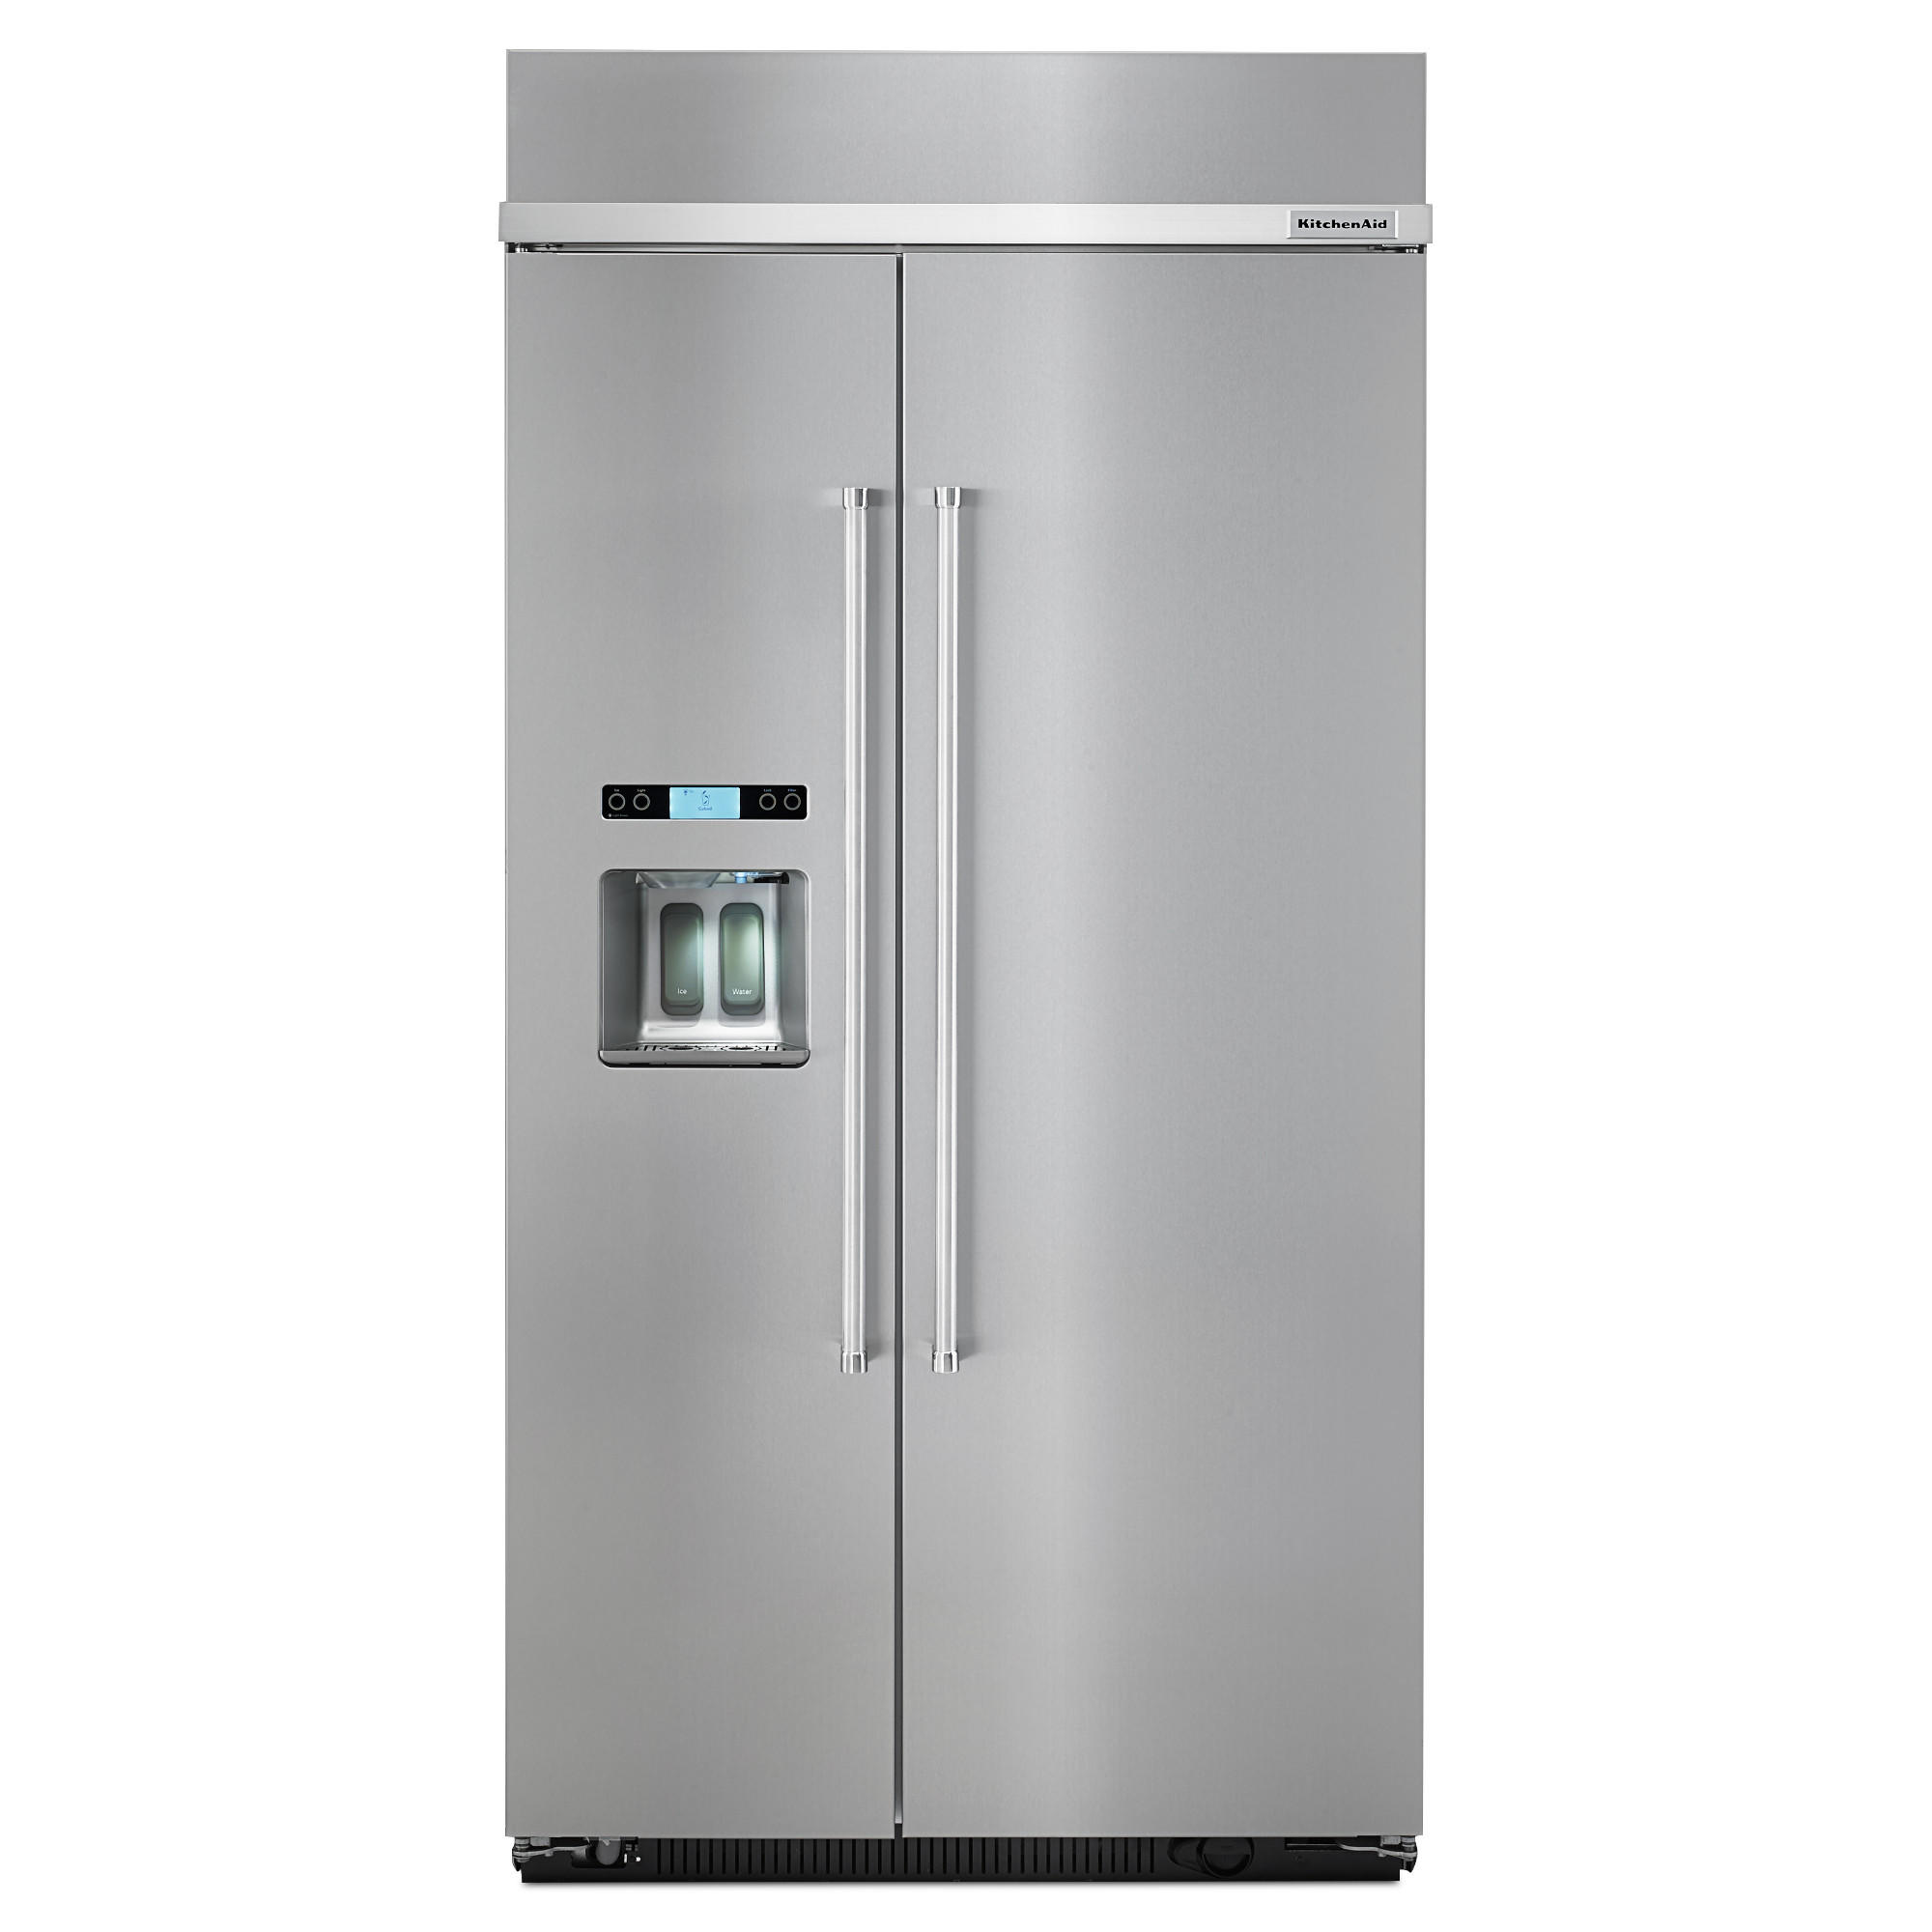 KitchenAid KBSD602ESS 25.0 cu. ft. Built-In Refrigerator - Stainless Steel